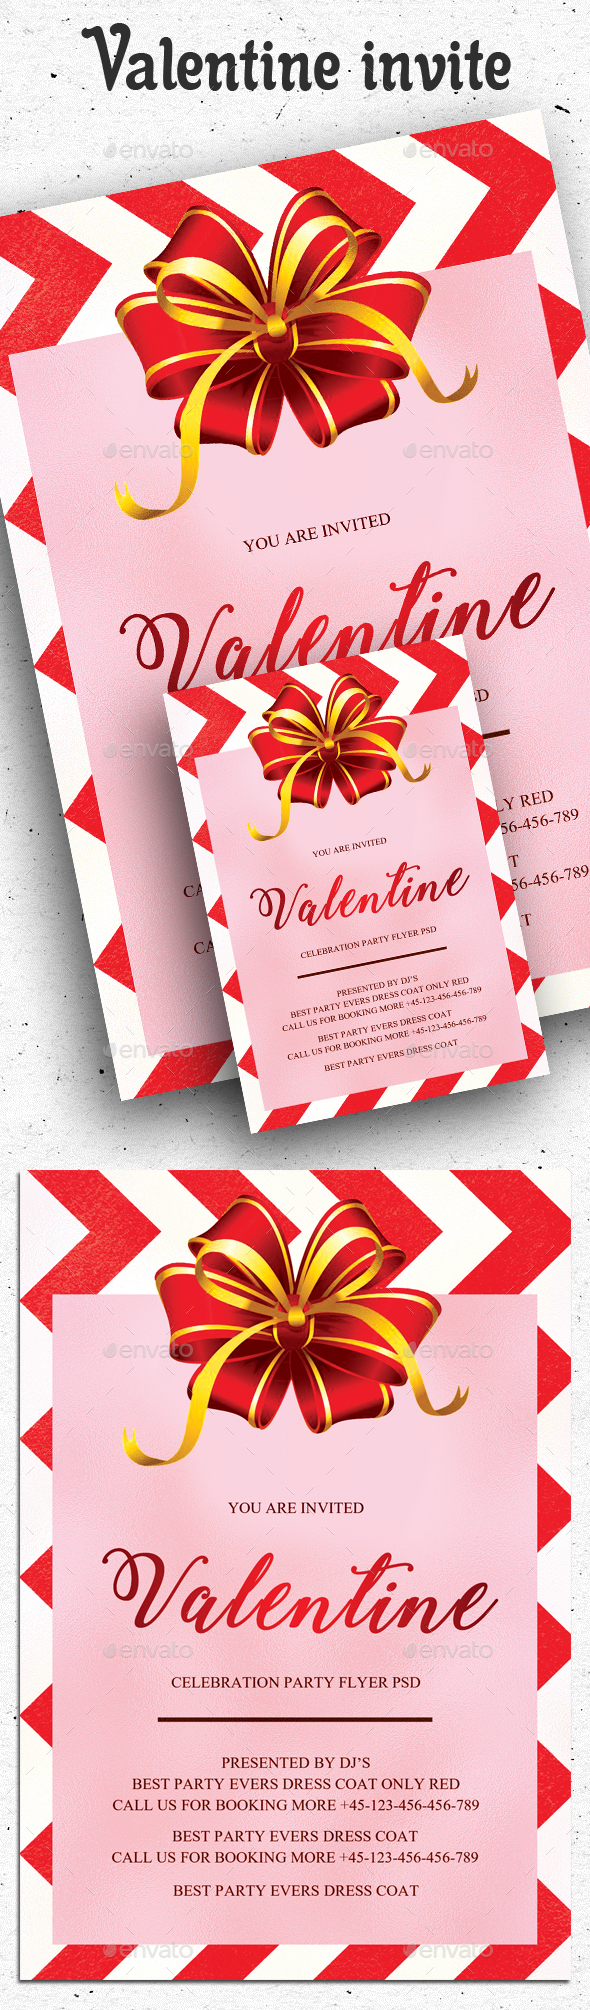 Valentine Flyer and Invitation